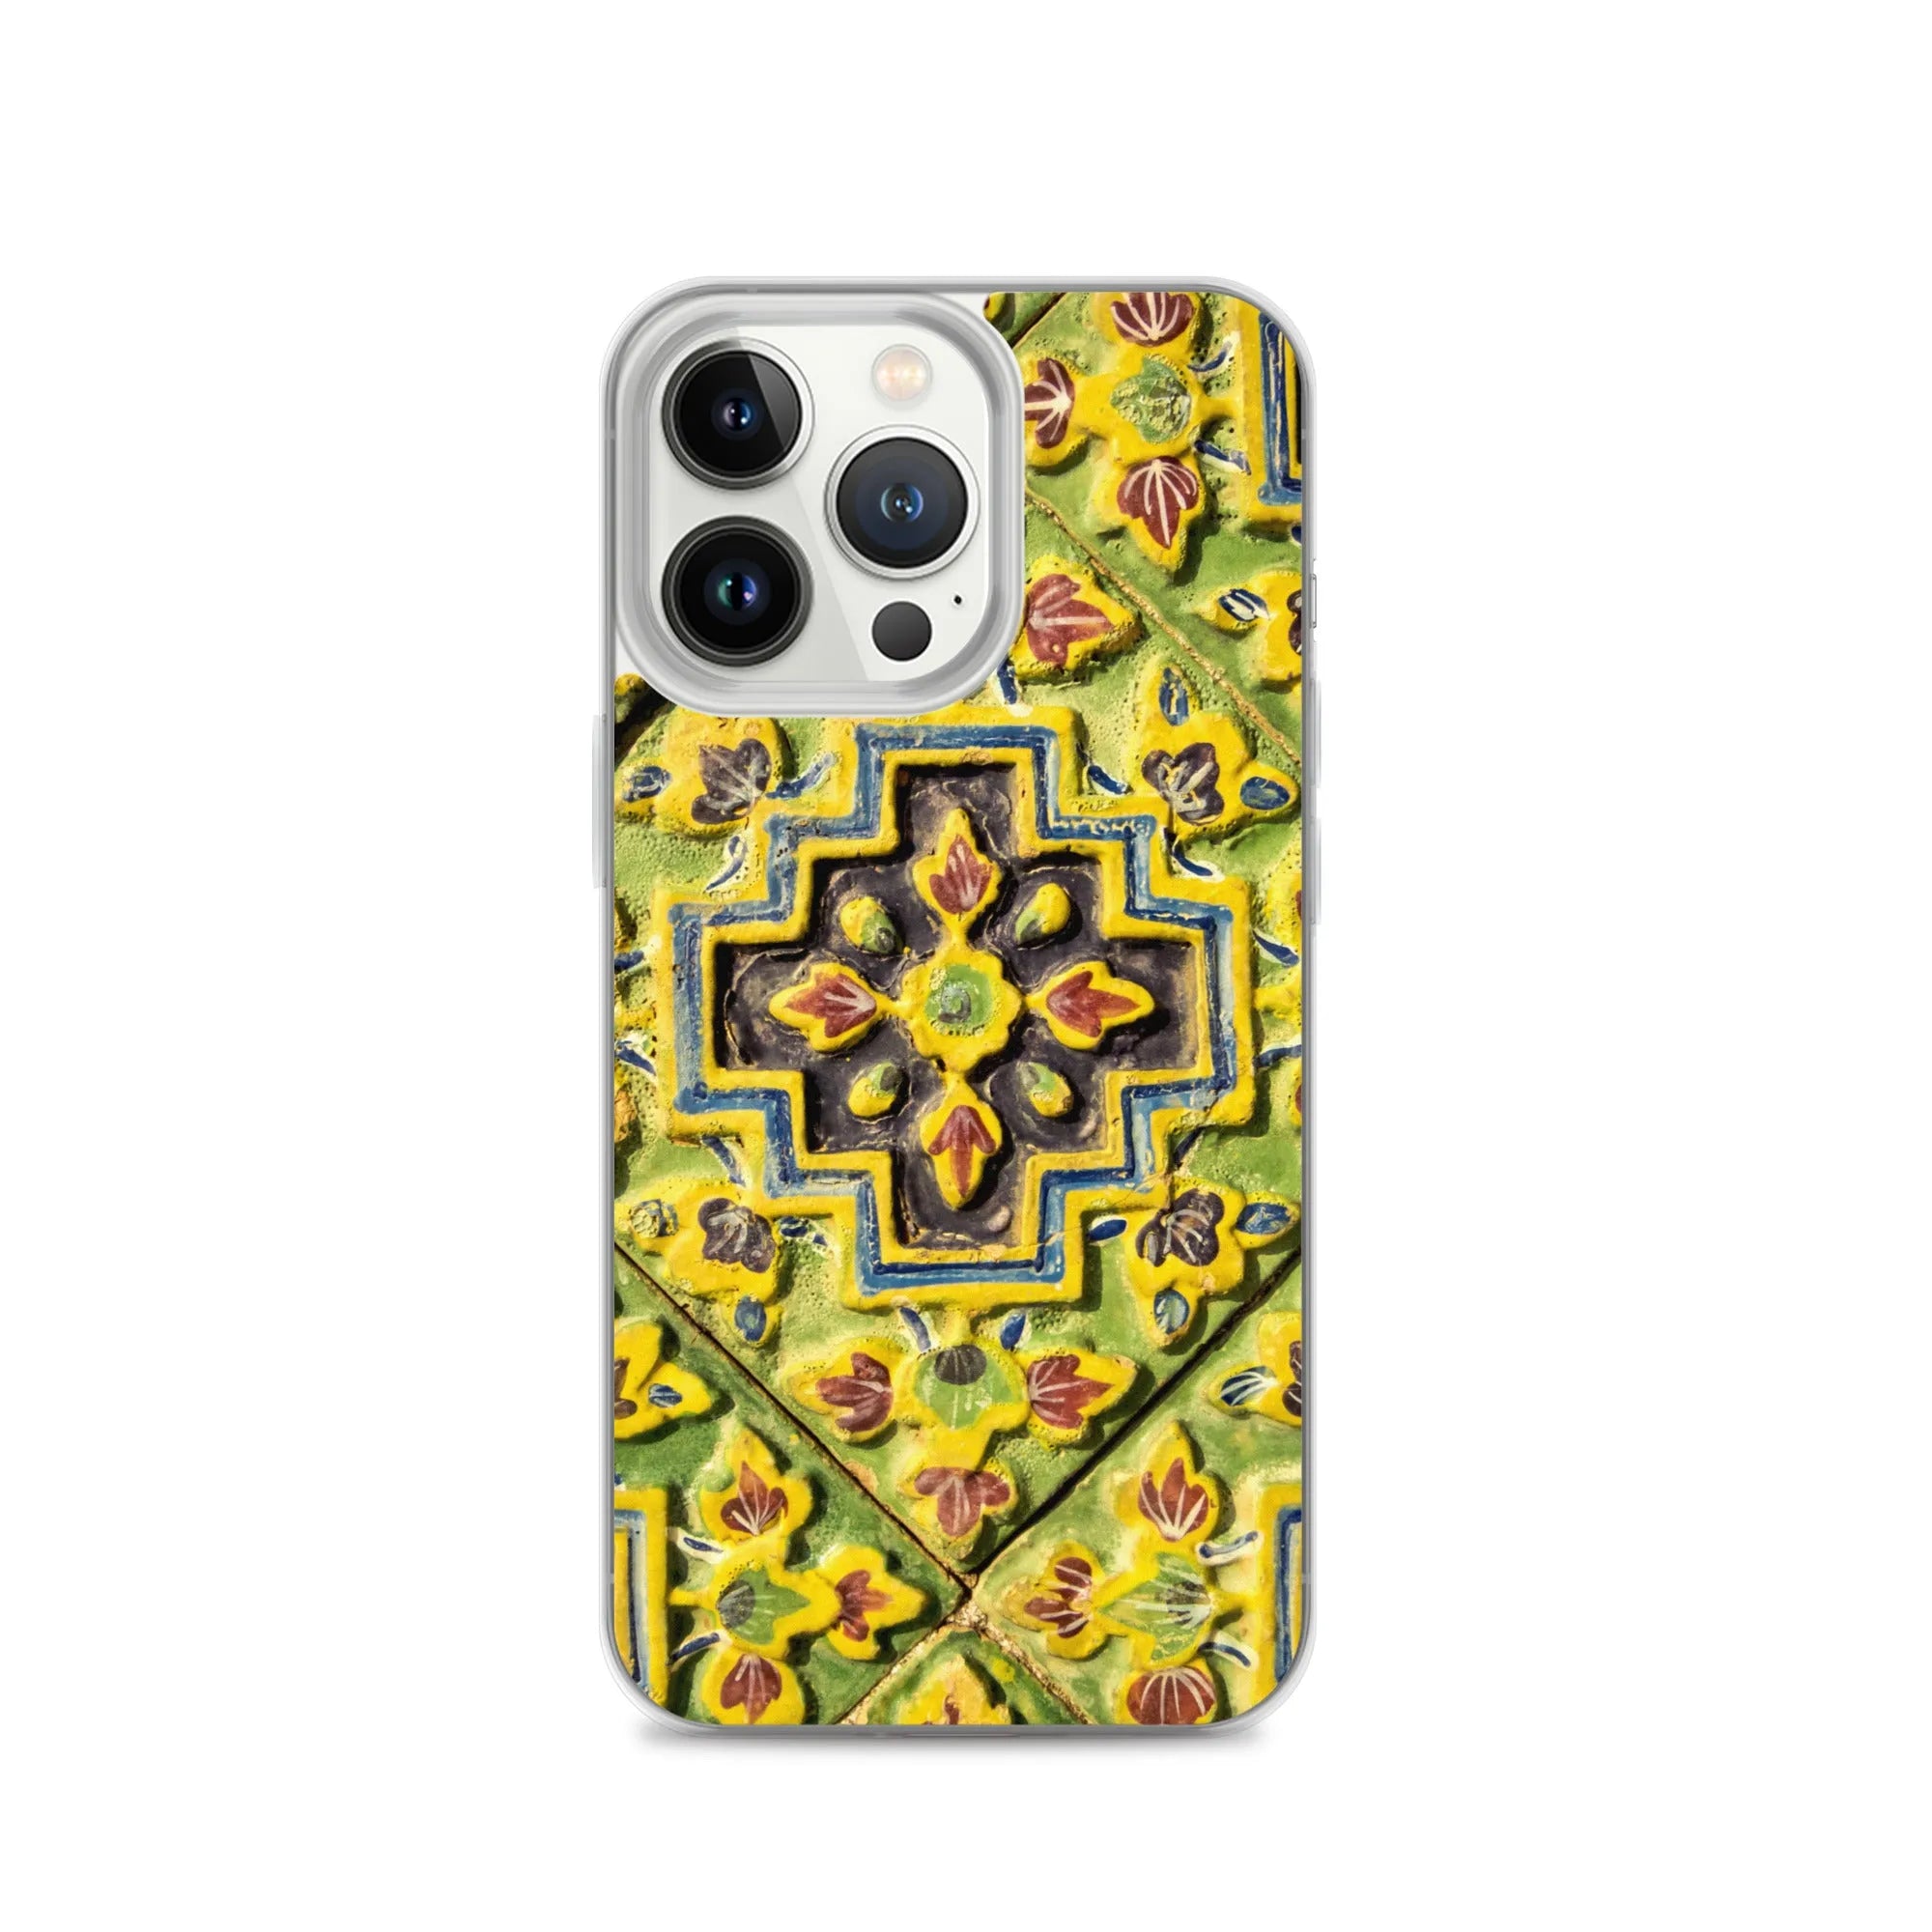 Tactile - Designer Travels Art Iphone Case - Iphone 13 Pro - Mobile Phone Cases - Aesthetic Art